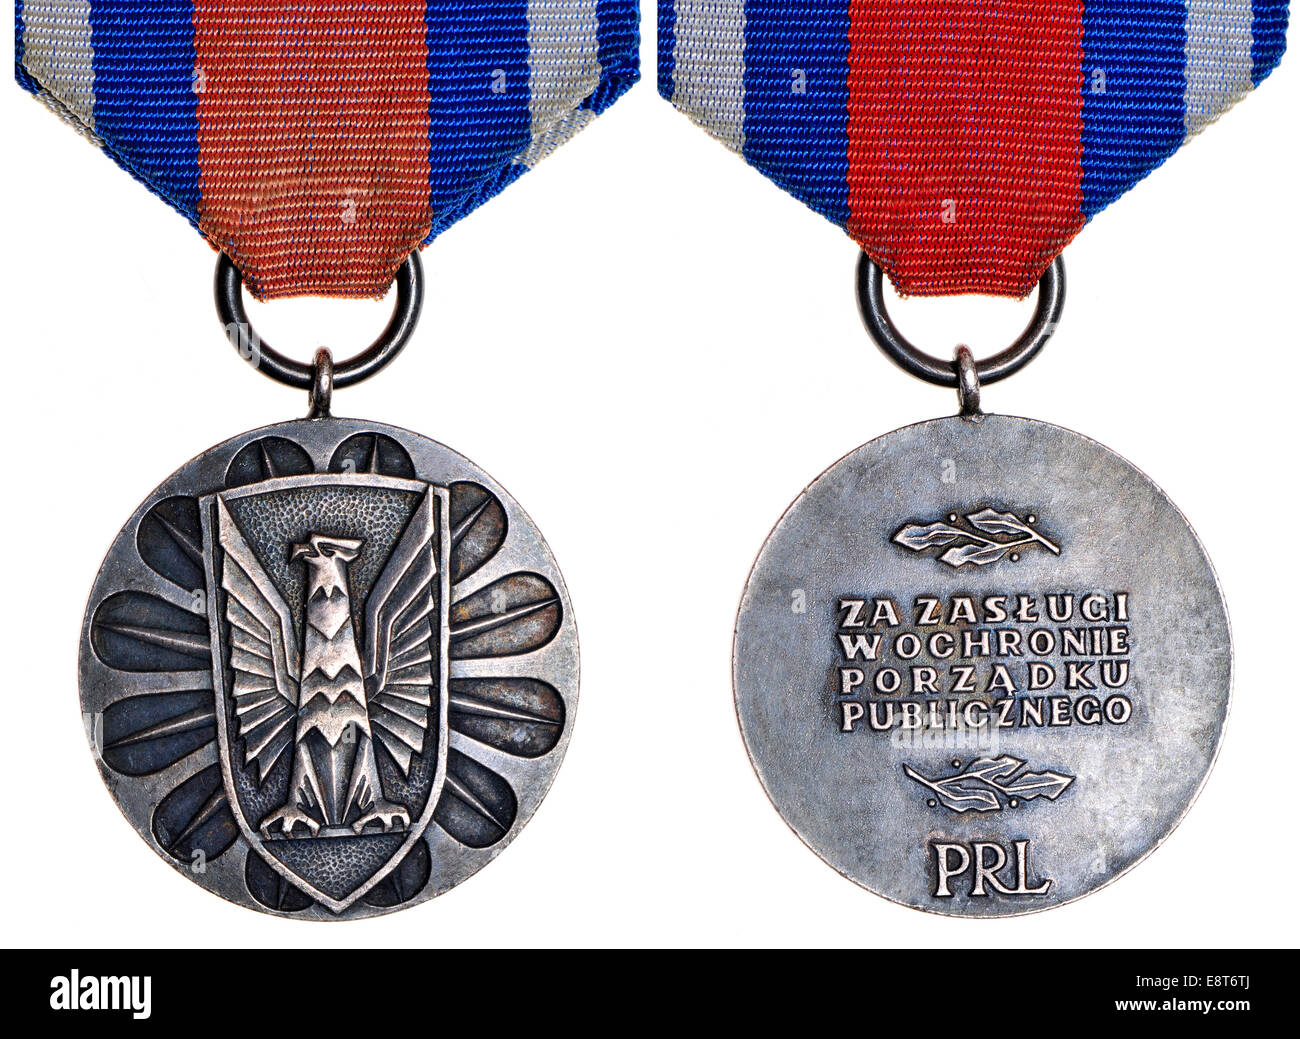 Polish silver medal awarded for 'Merit in Public Protection' - 'W OCHRONIE PORZADKU PUBLICZNEGO' Stock Photo